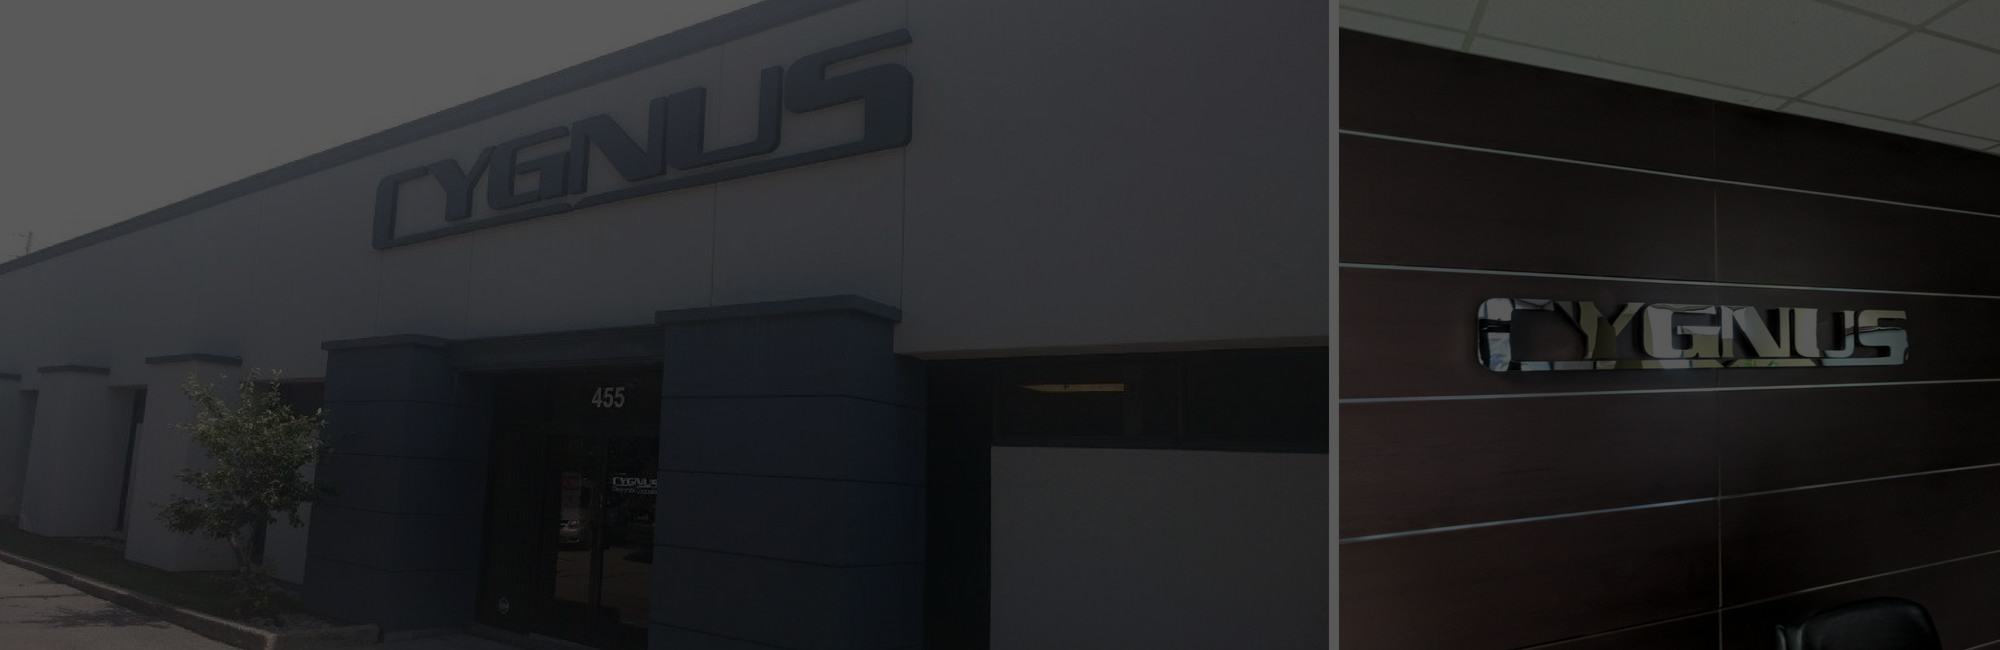 Electronics Manufacturer Cygnus Corporation